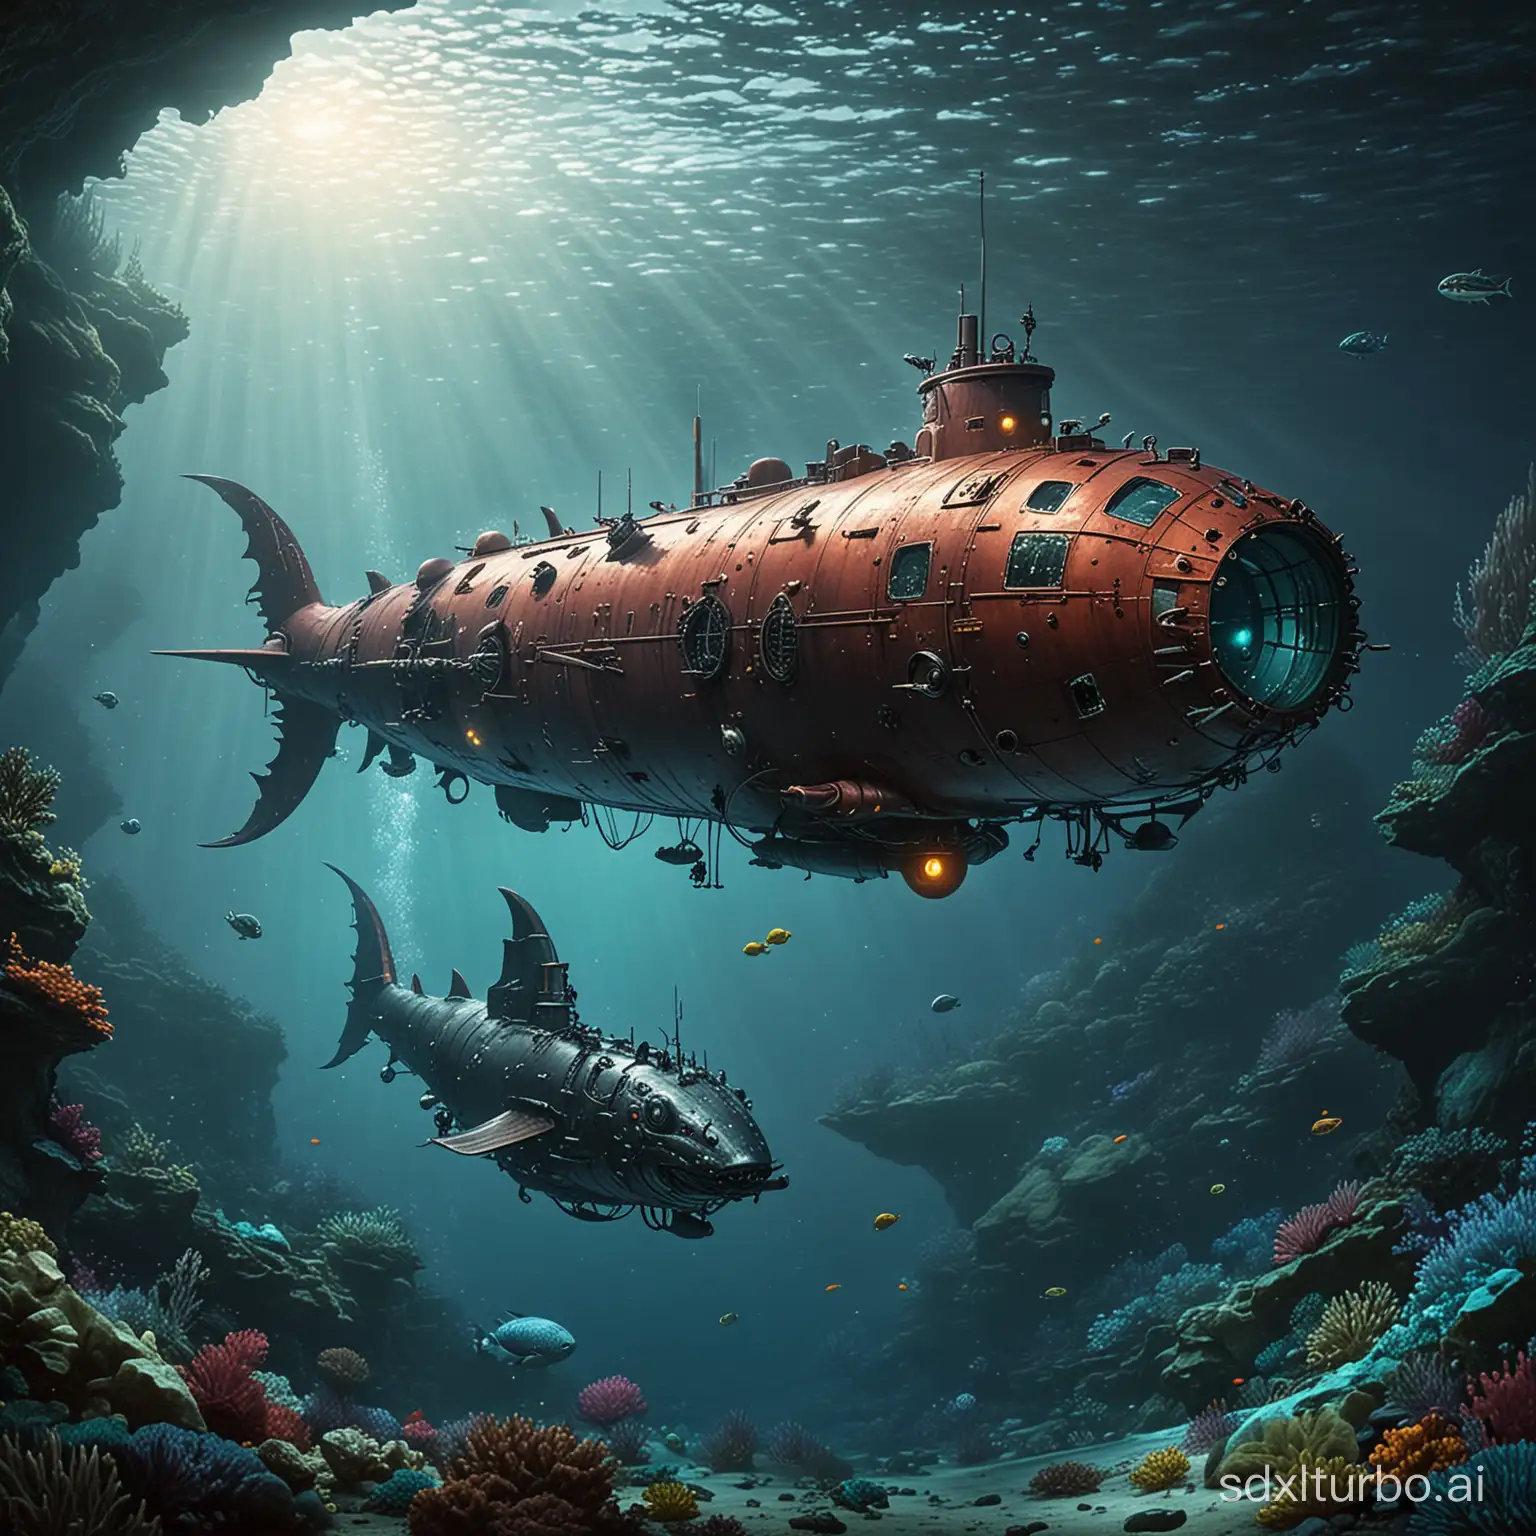 Underwater-Adventure-Dragon-Submarine-Exploring-Deep-Ocean-Depths